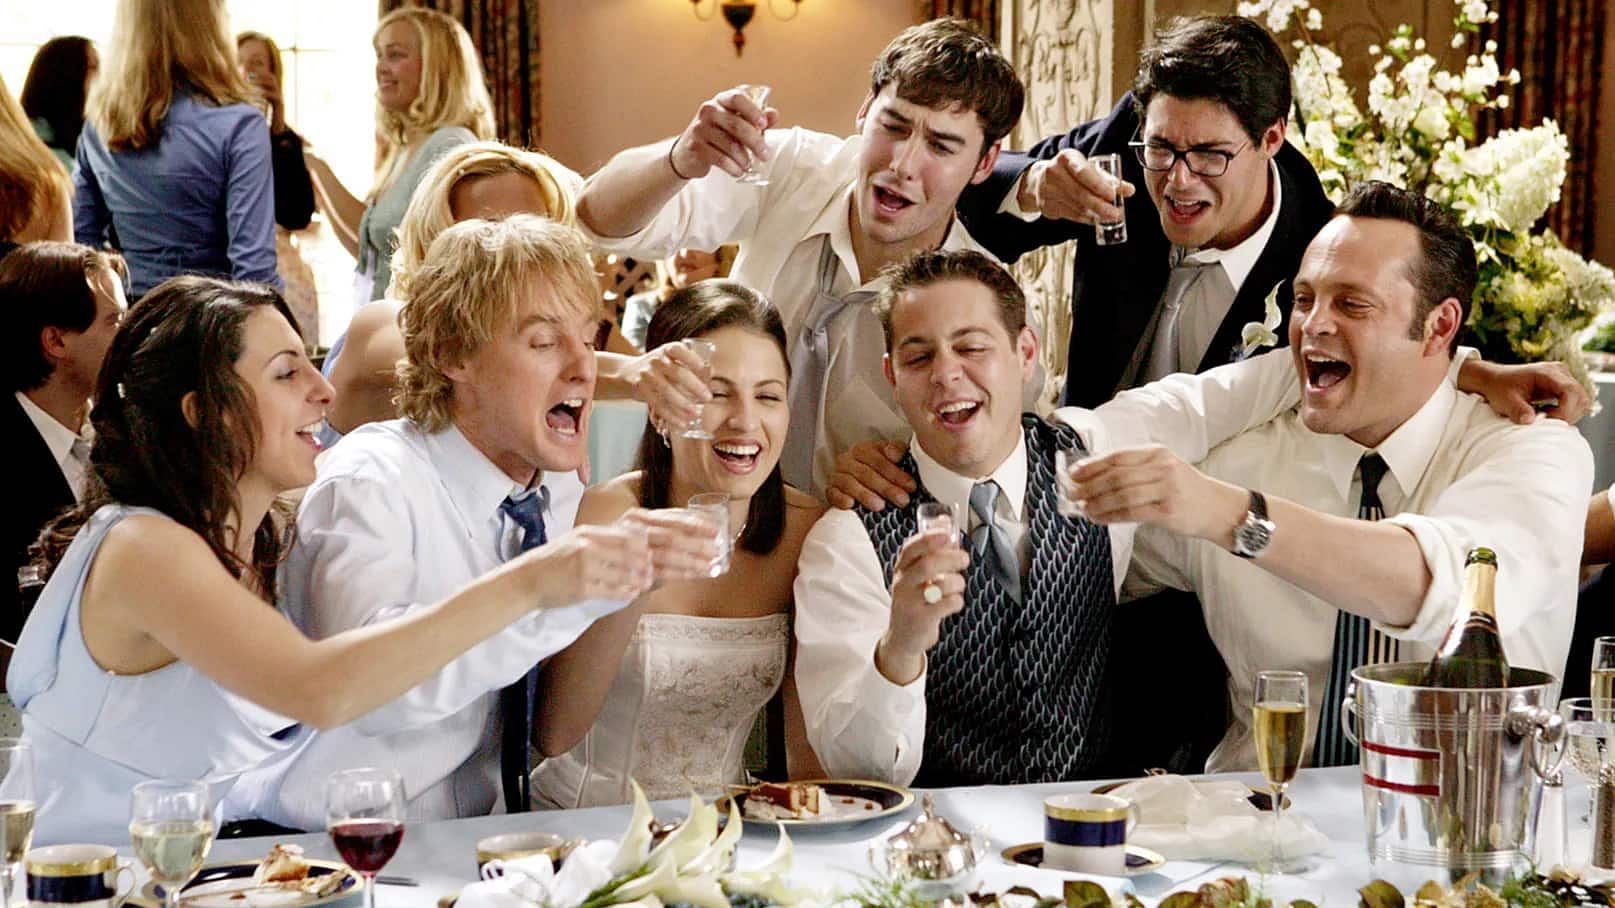 Wedding Crashers (Image via New Line Cinema)